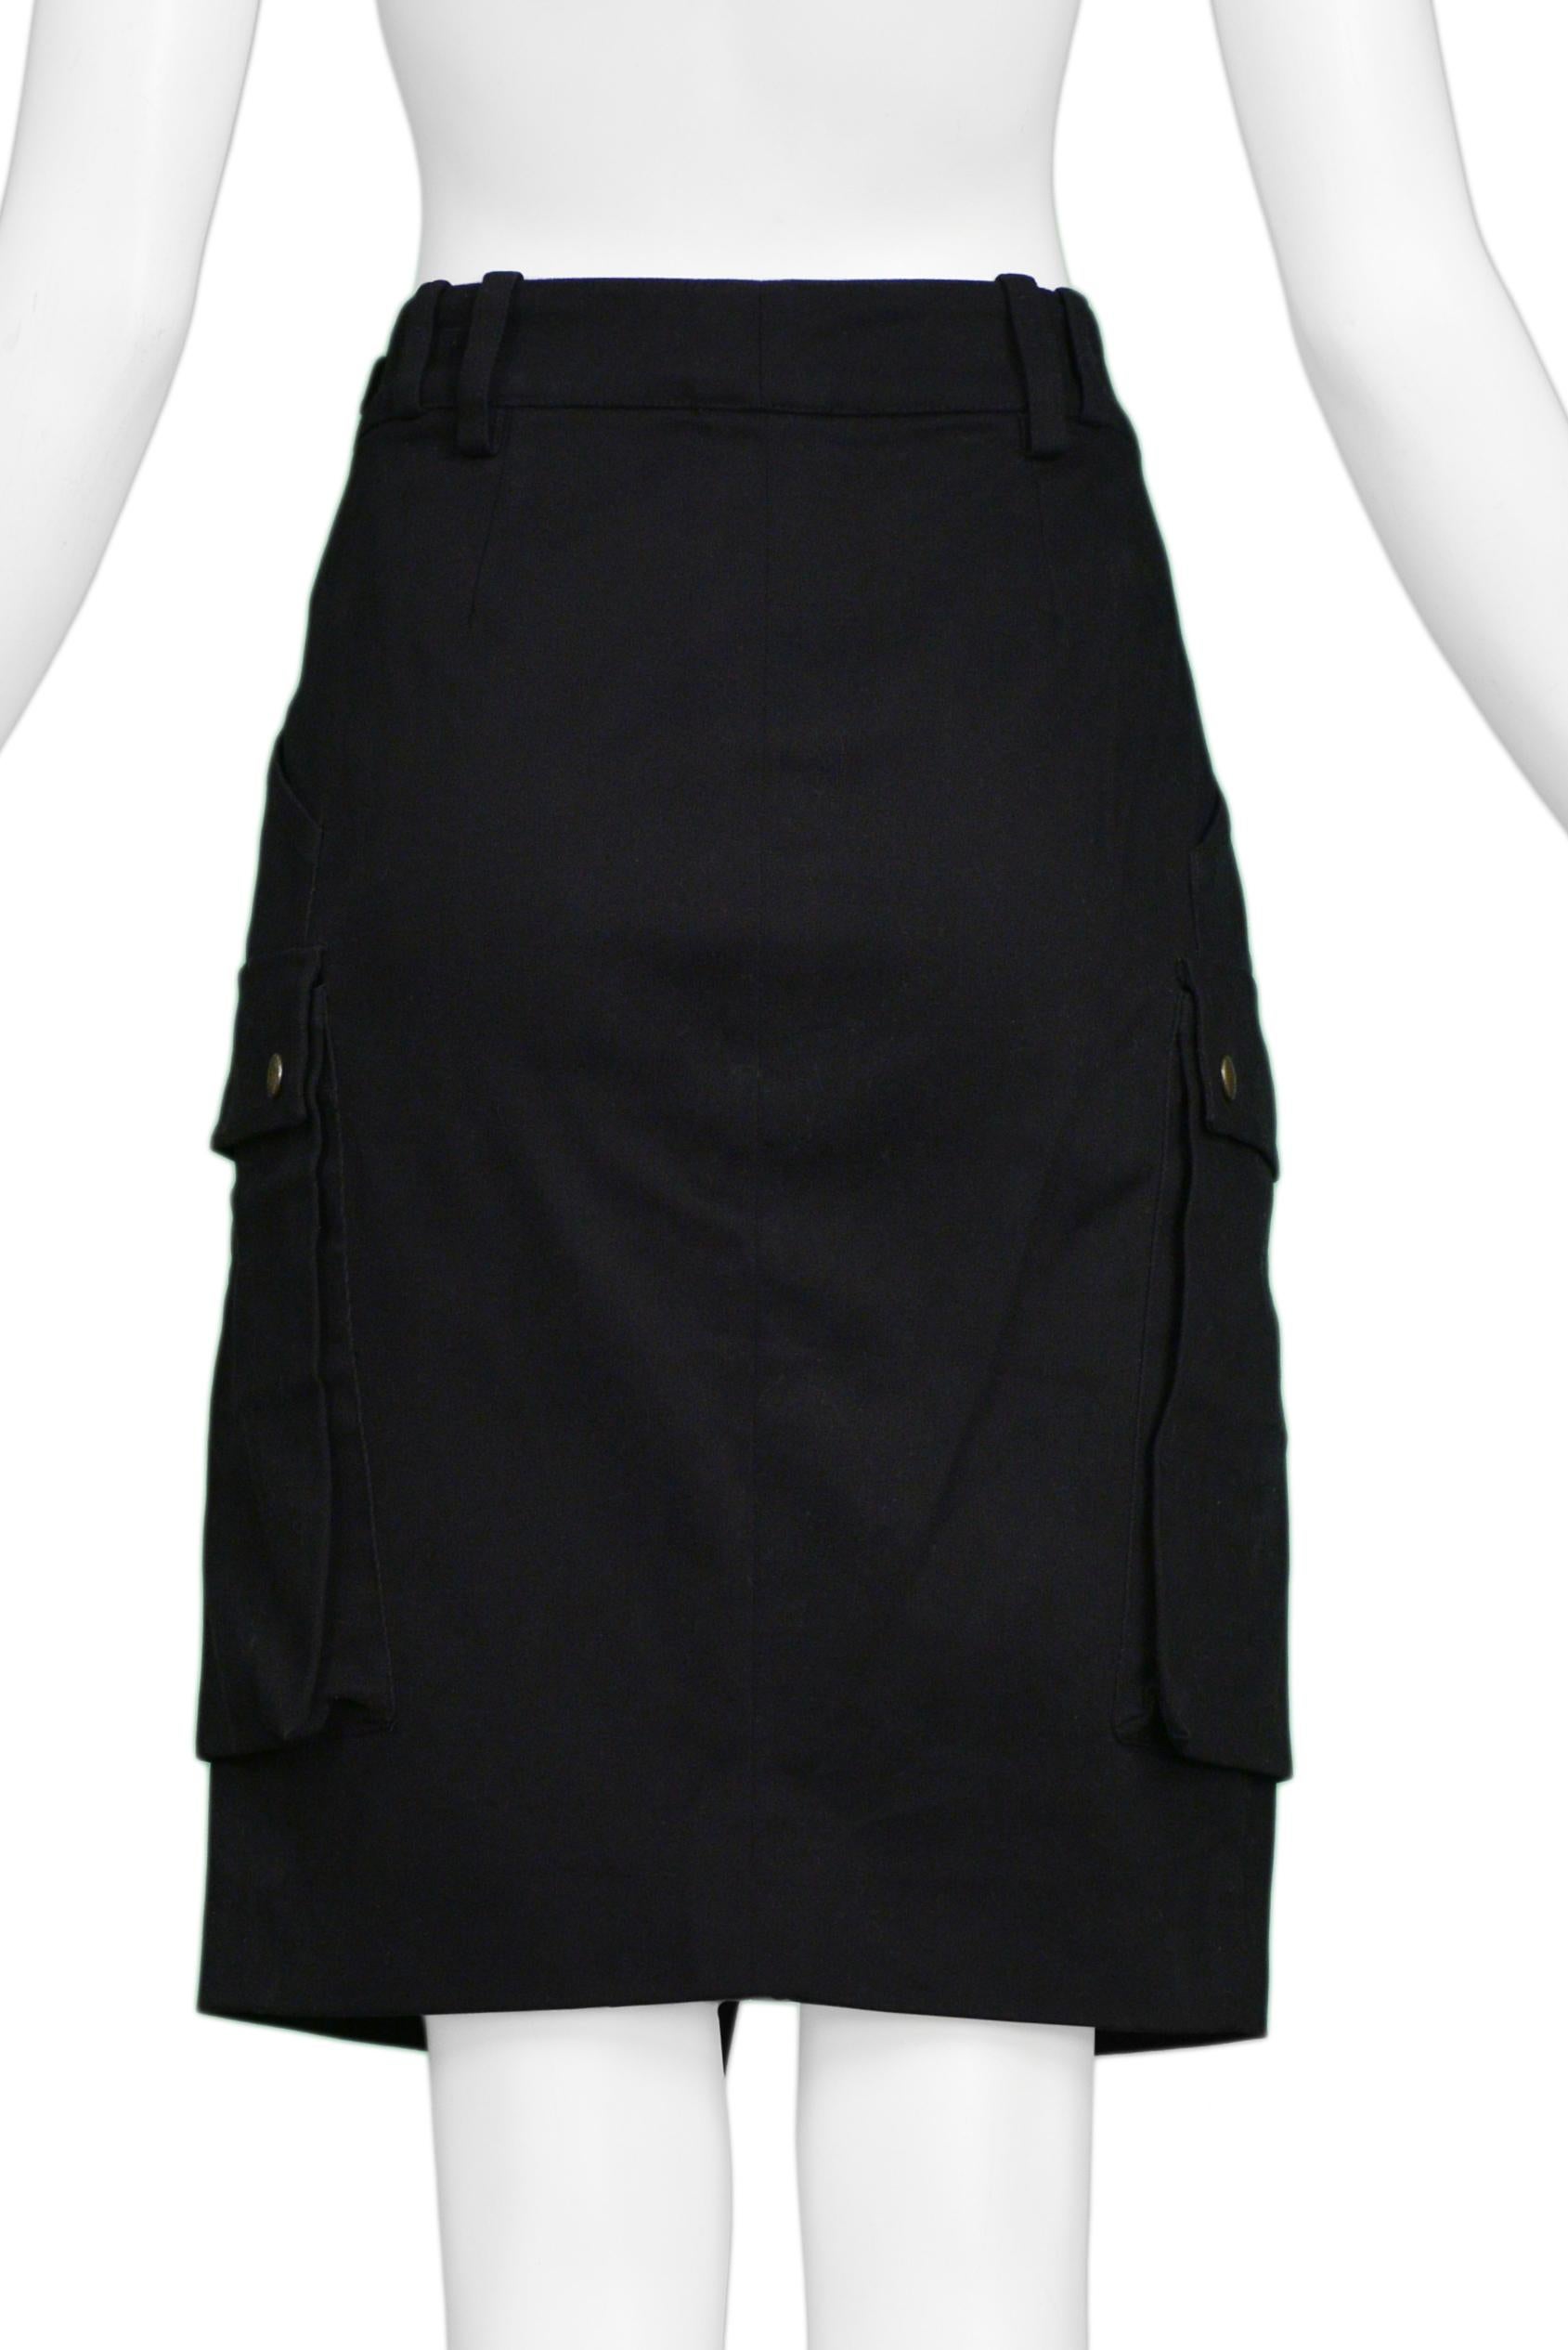 Balenciaga By Ghesquiere Black Cargo Skirt 2002 For Sale 2